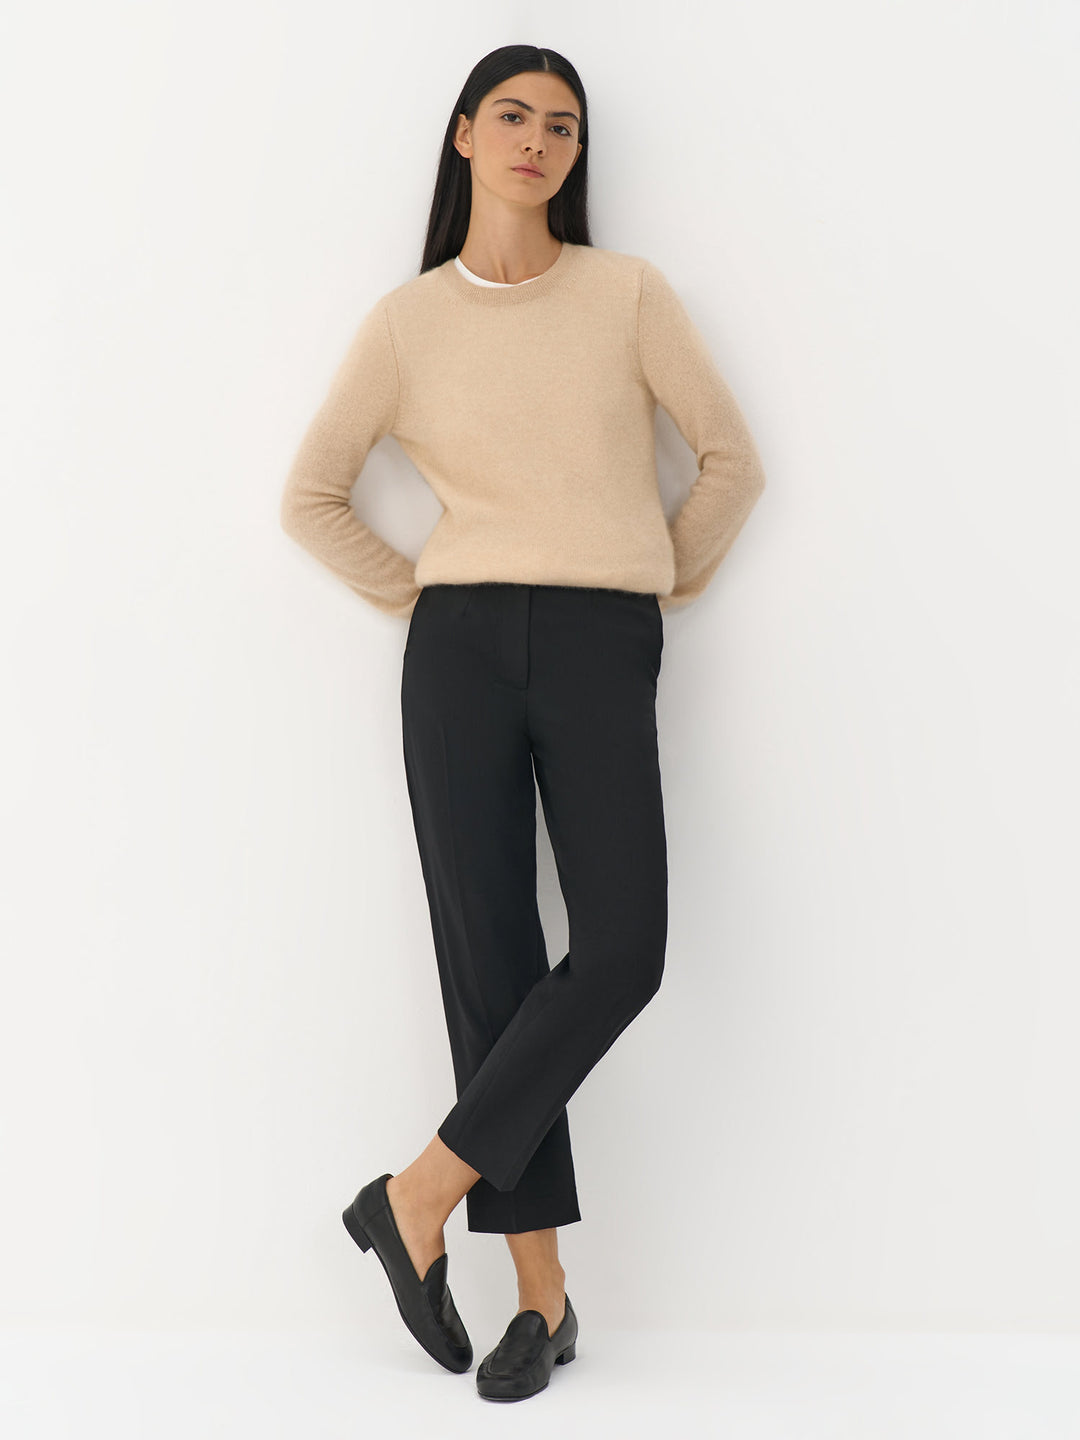 wool pants - women - high waist - cropped - black